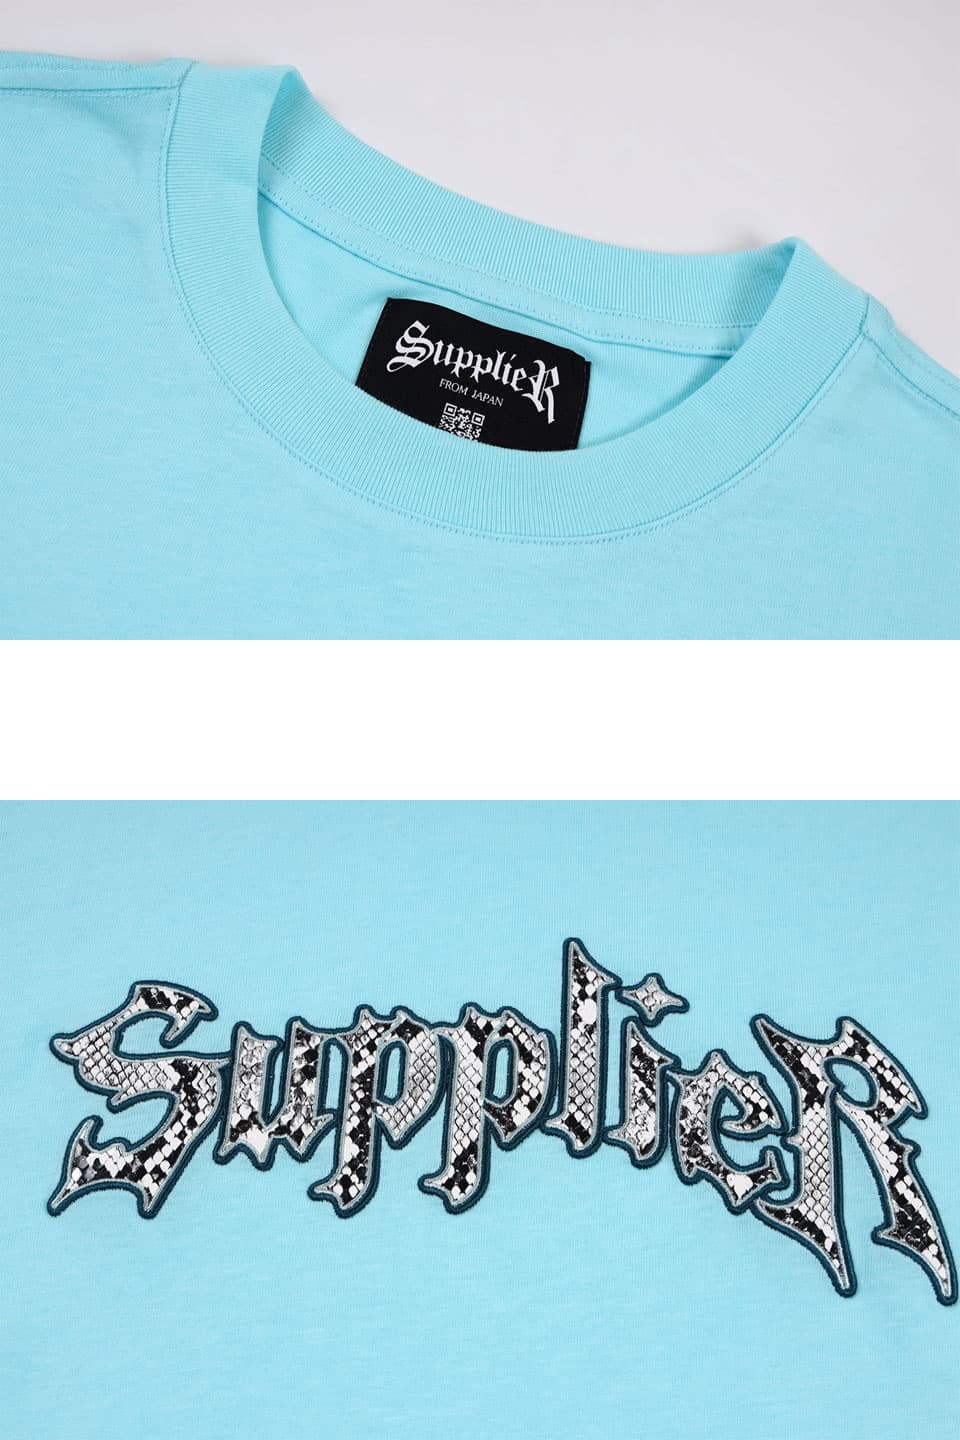 SUPPLIER (サプライヤー) Tシャツ RHINESTONE CROSS TEE 2.0 正規取扱 